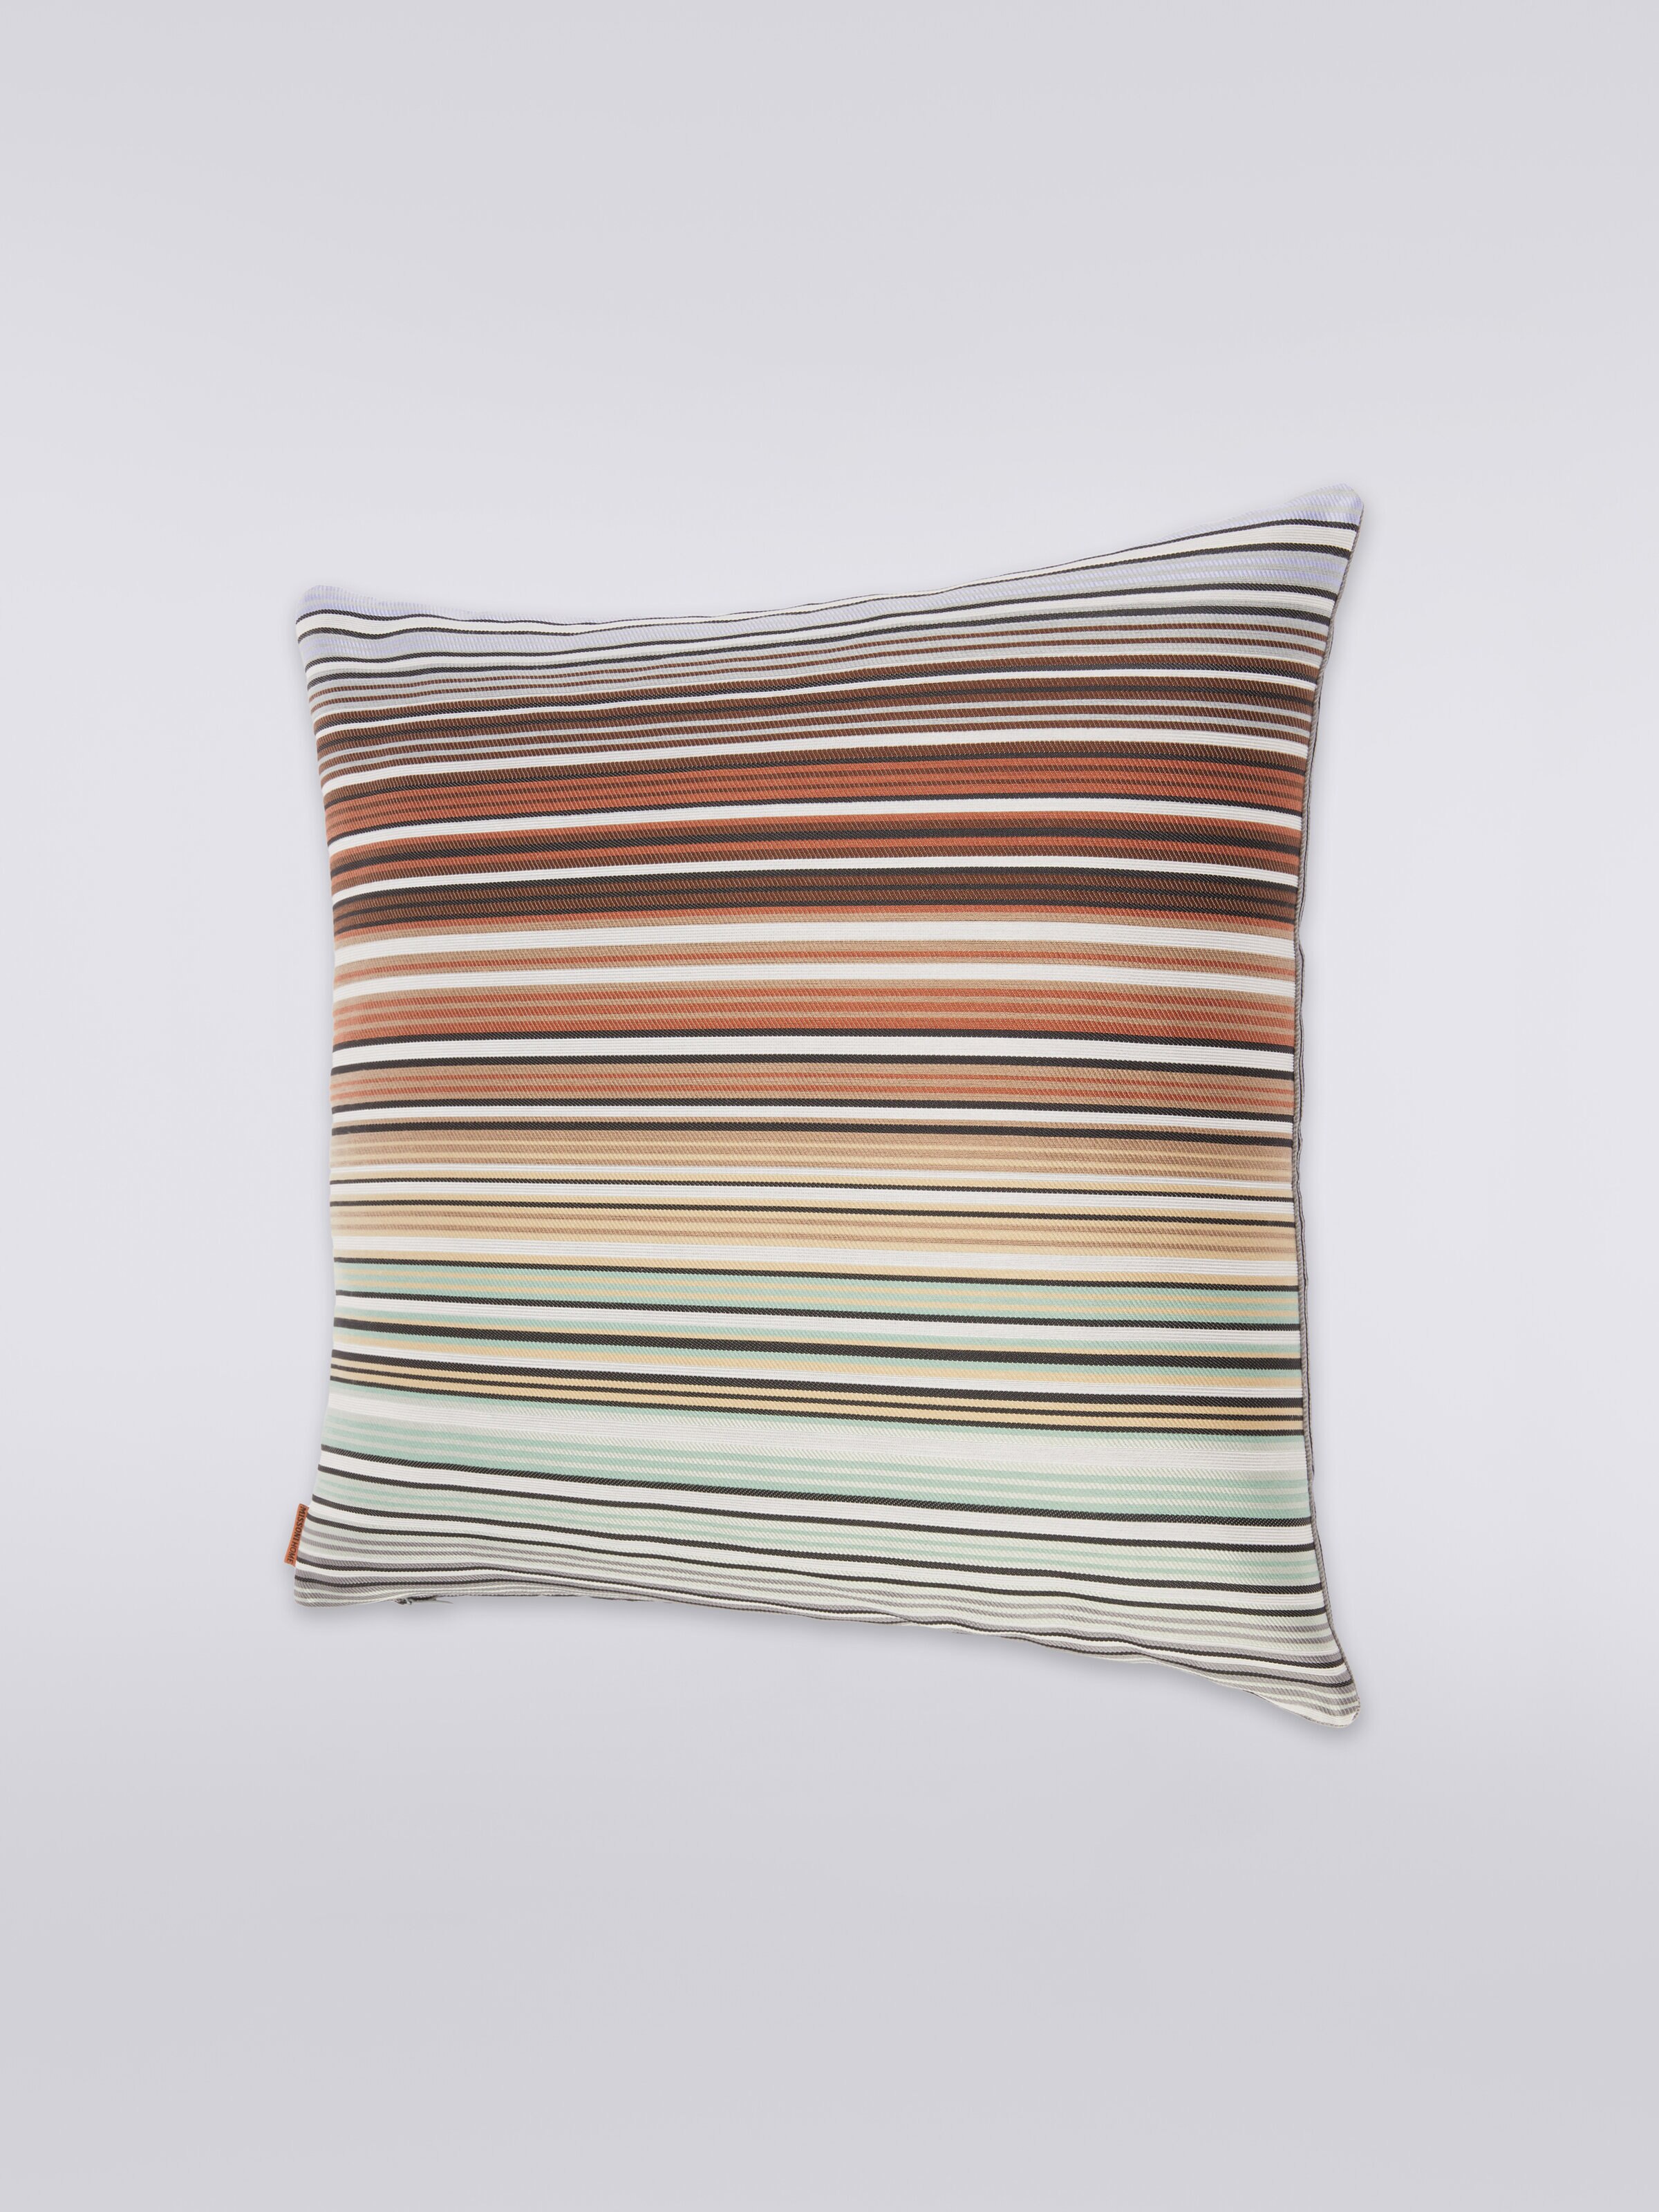 Brighton PW 40x40 cm cushion, Multicoloured  - 1